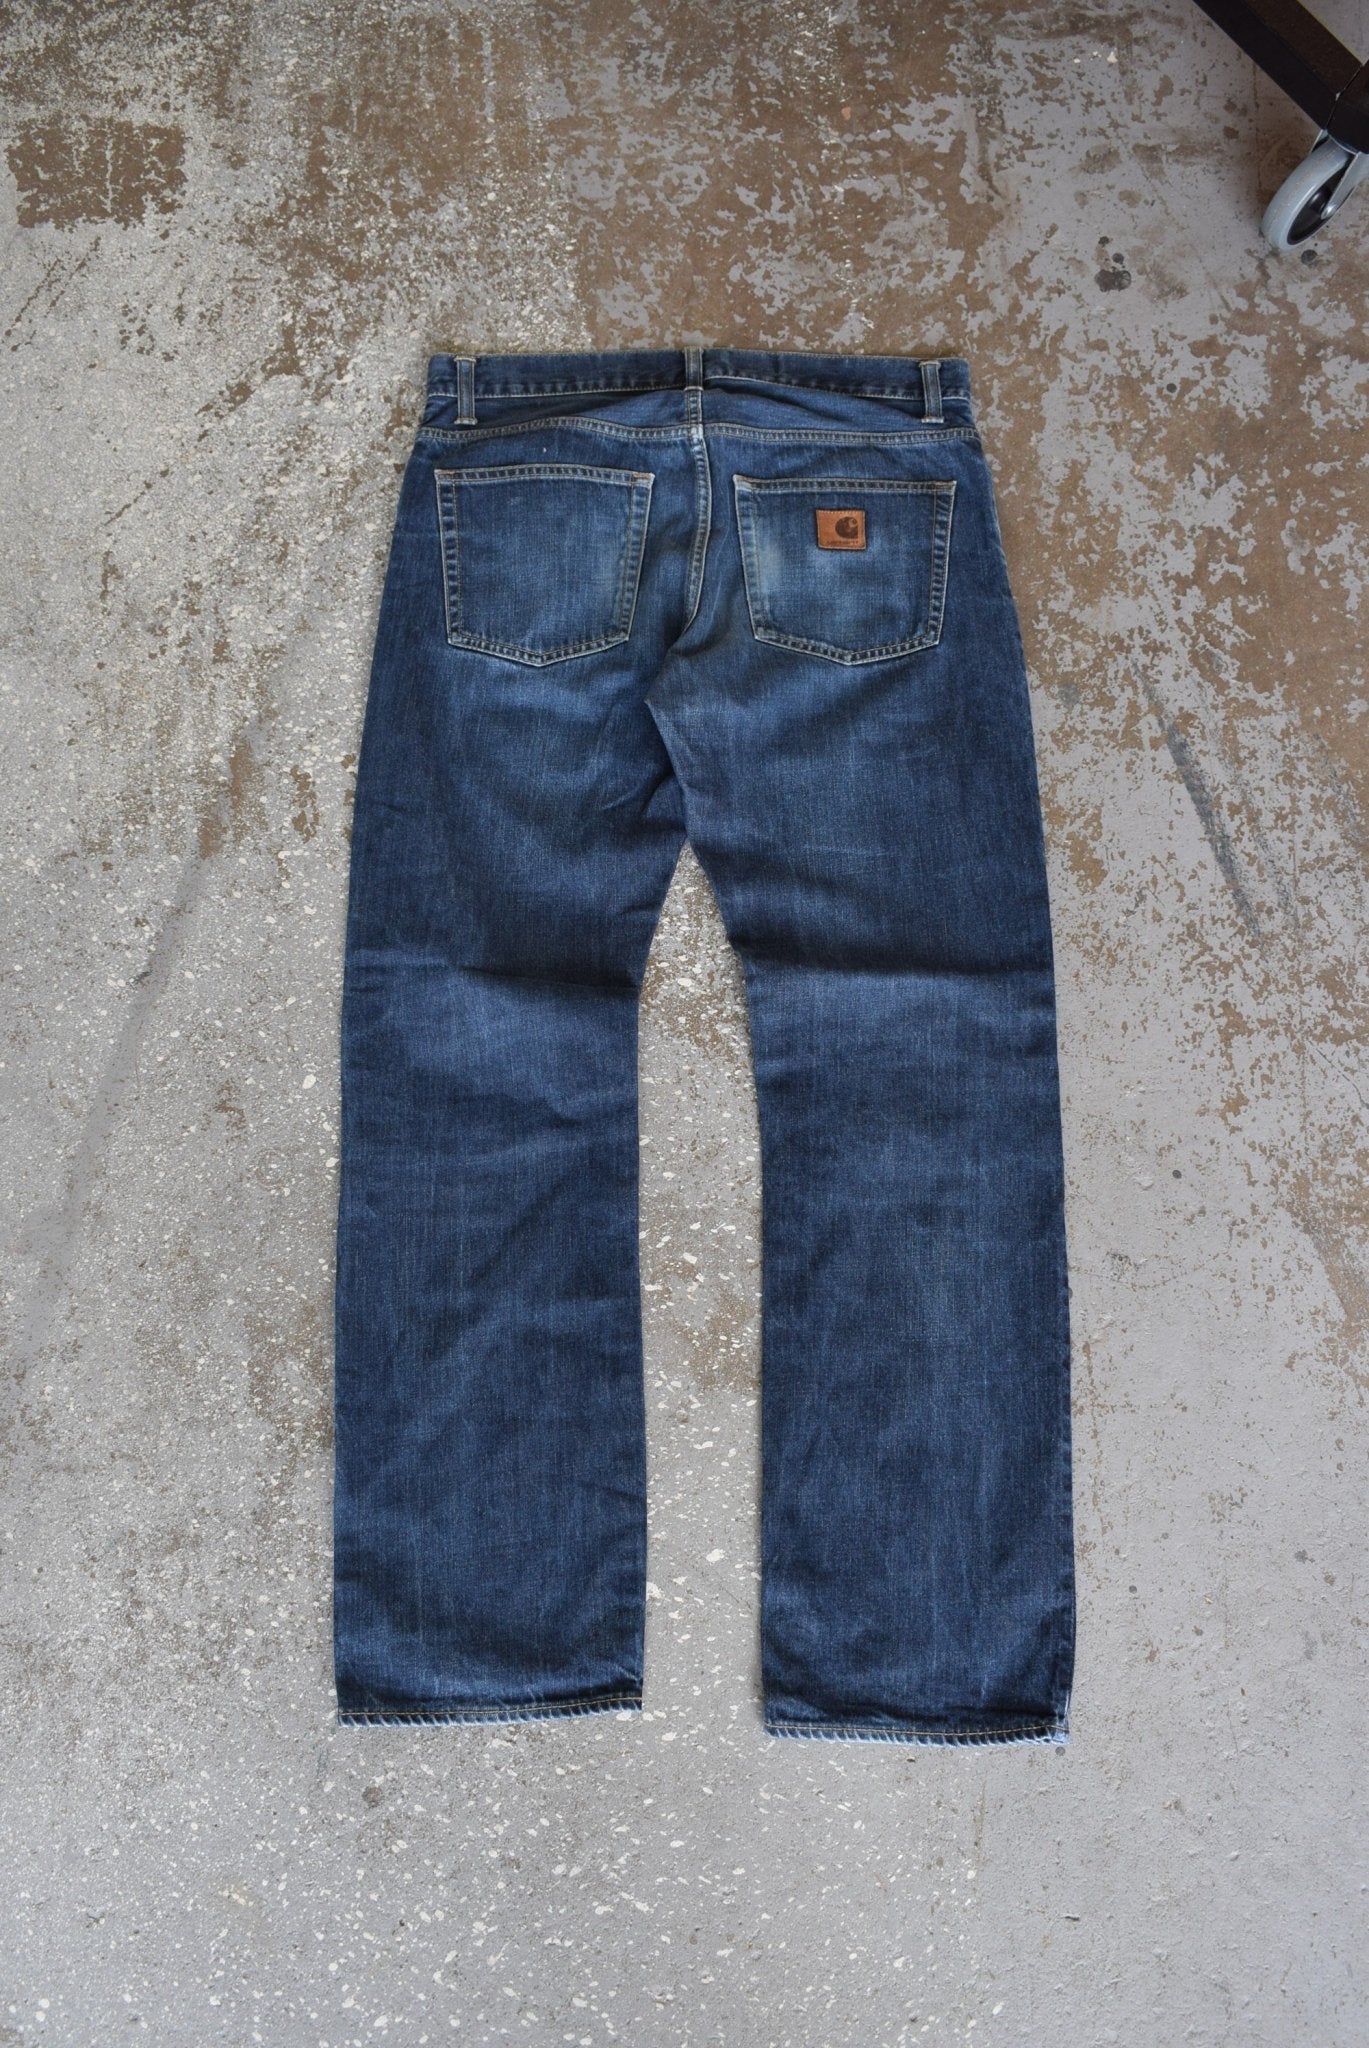 Vintage Carhartt Workwear Jeans (32) - Retrospective Store